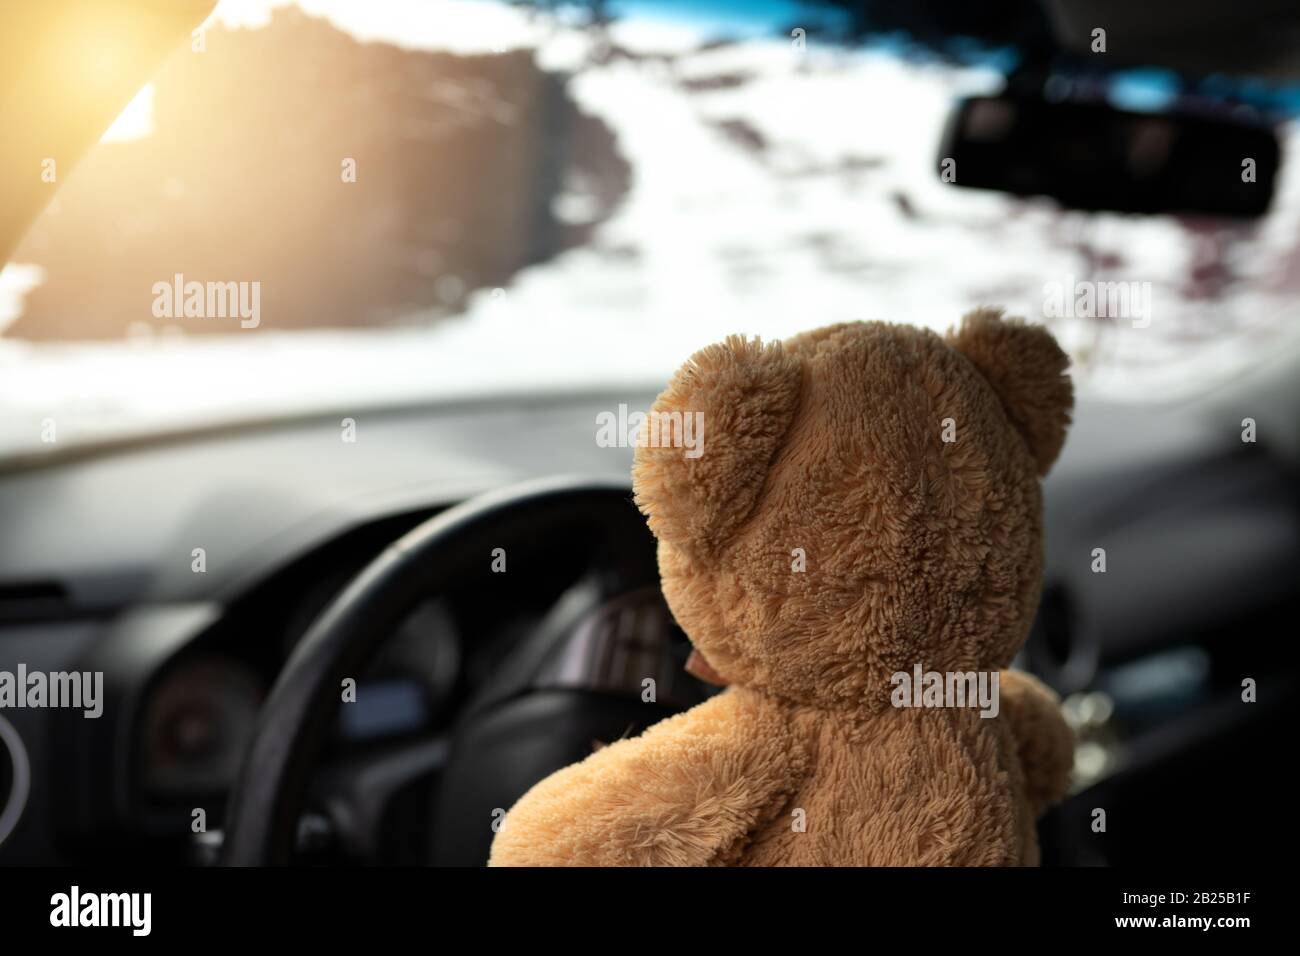 teddy bear in car